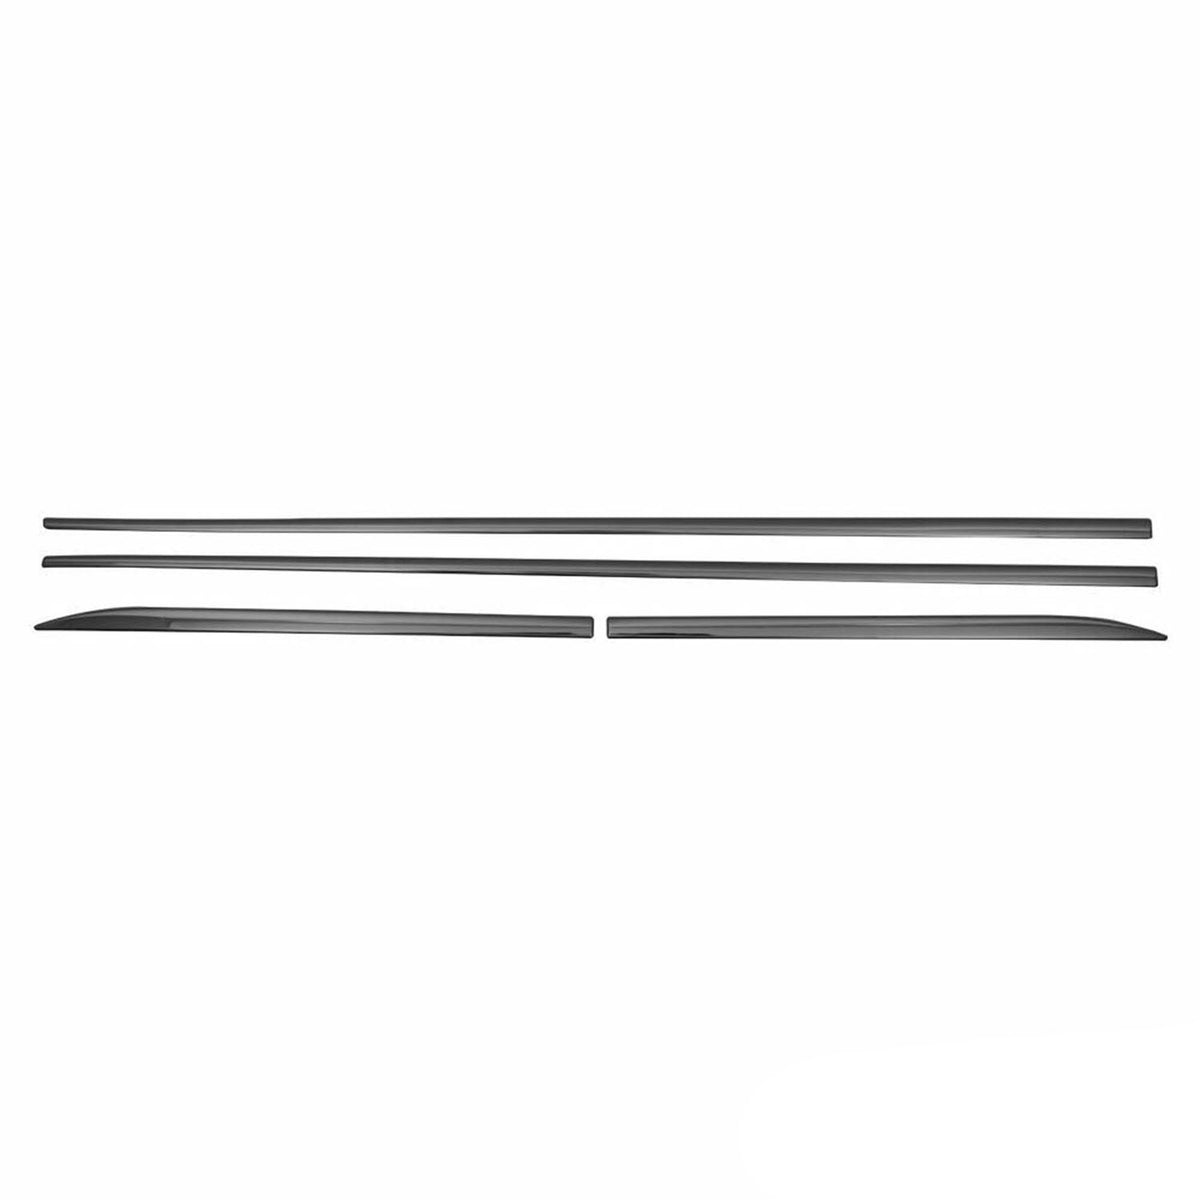 Seitentürleiste Türschutzleiste für Skoda Yeti Scala Rapid Chrom Stahl Dunkel 4x